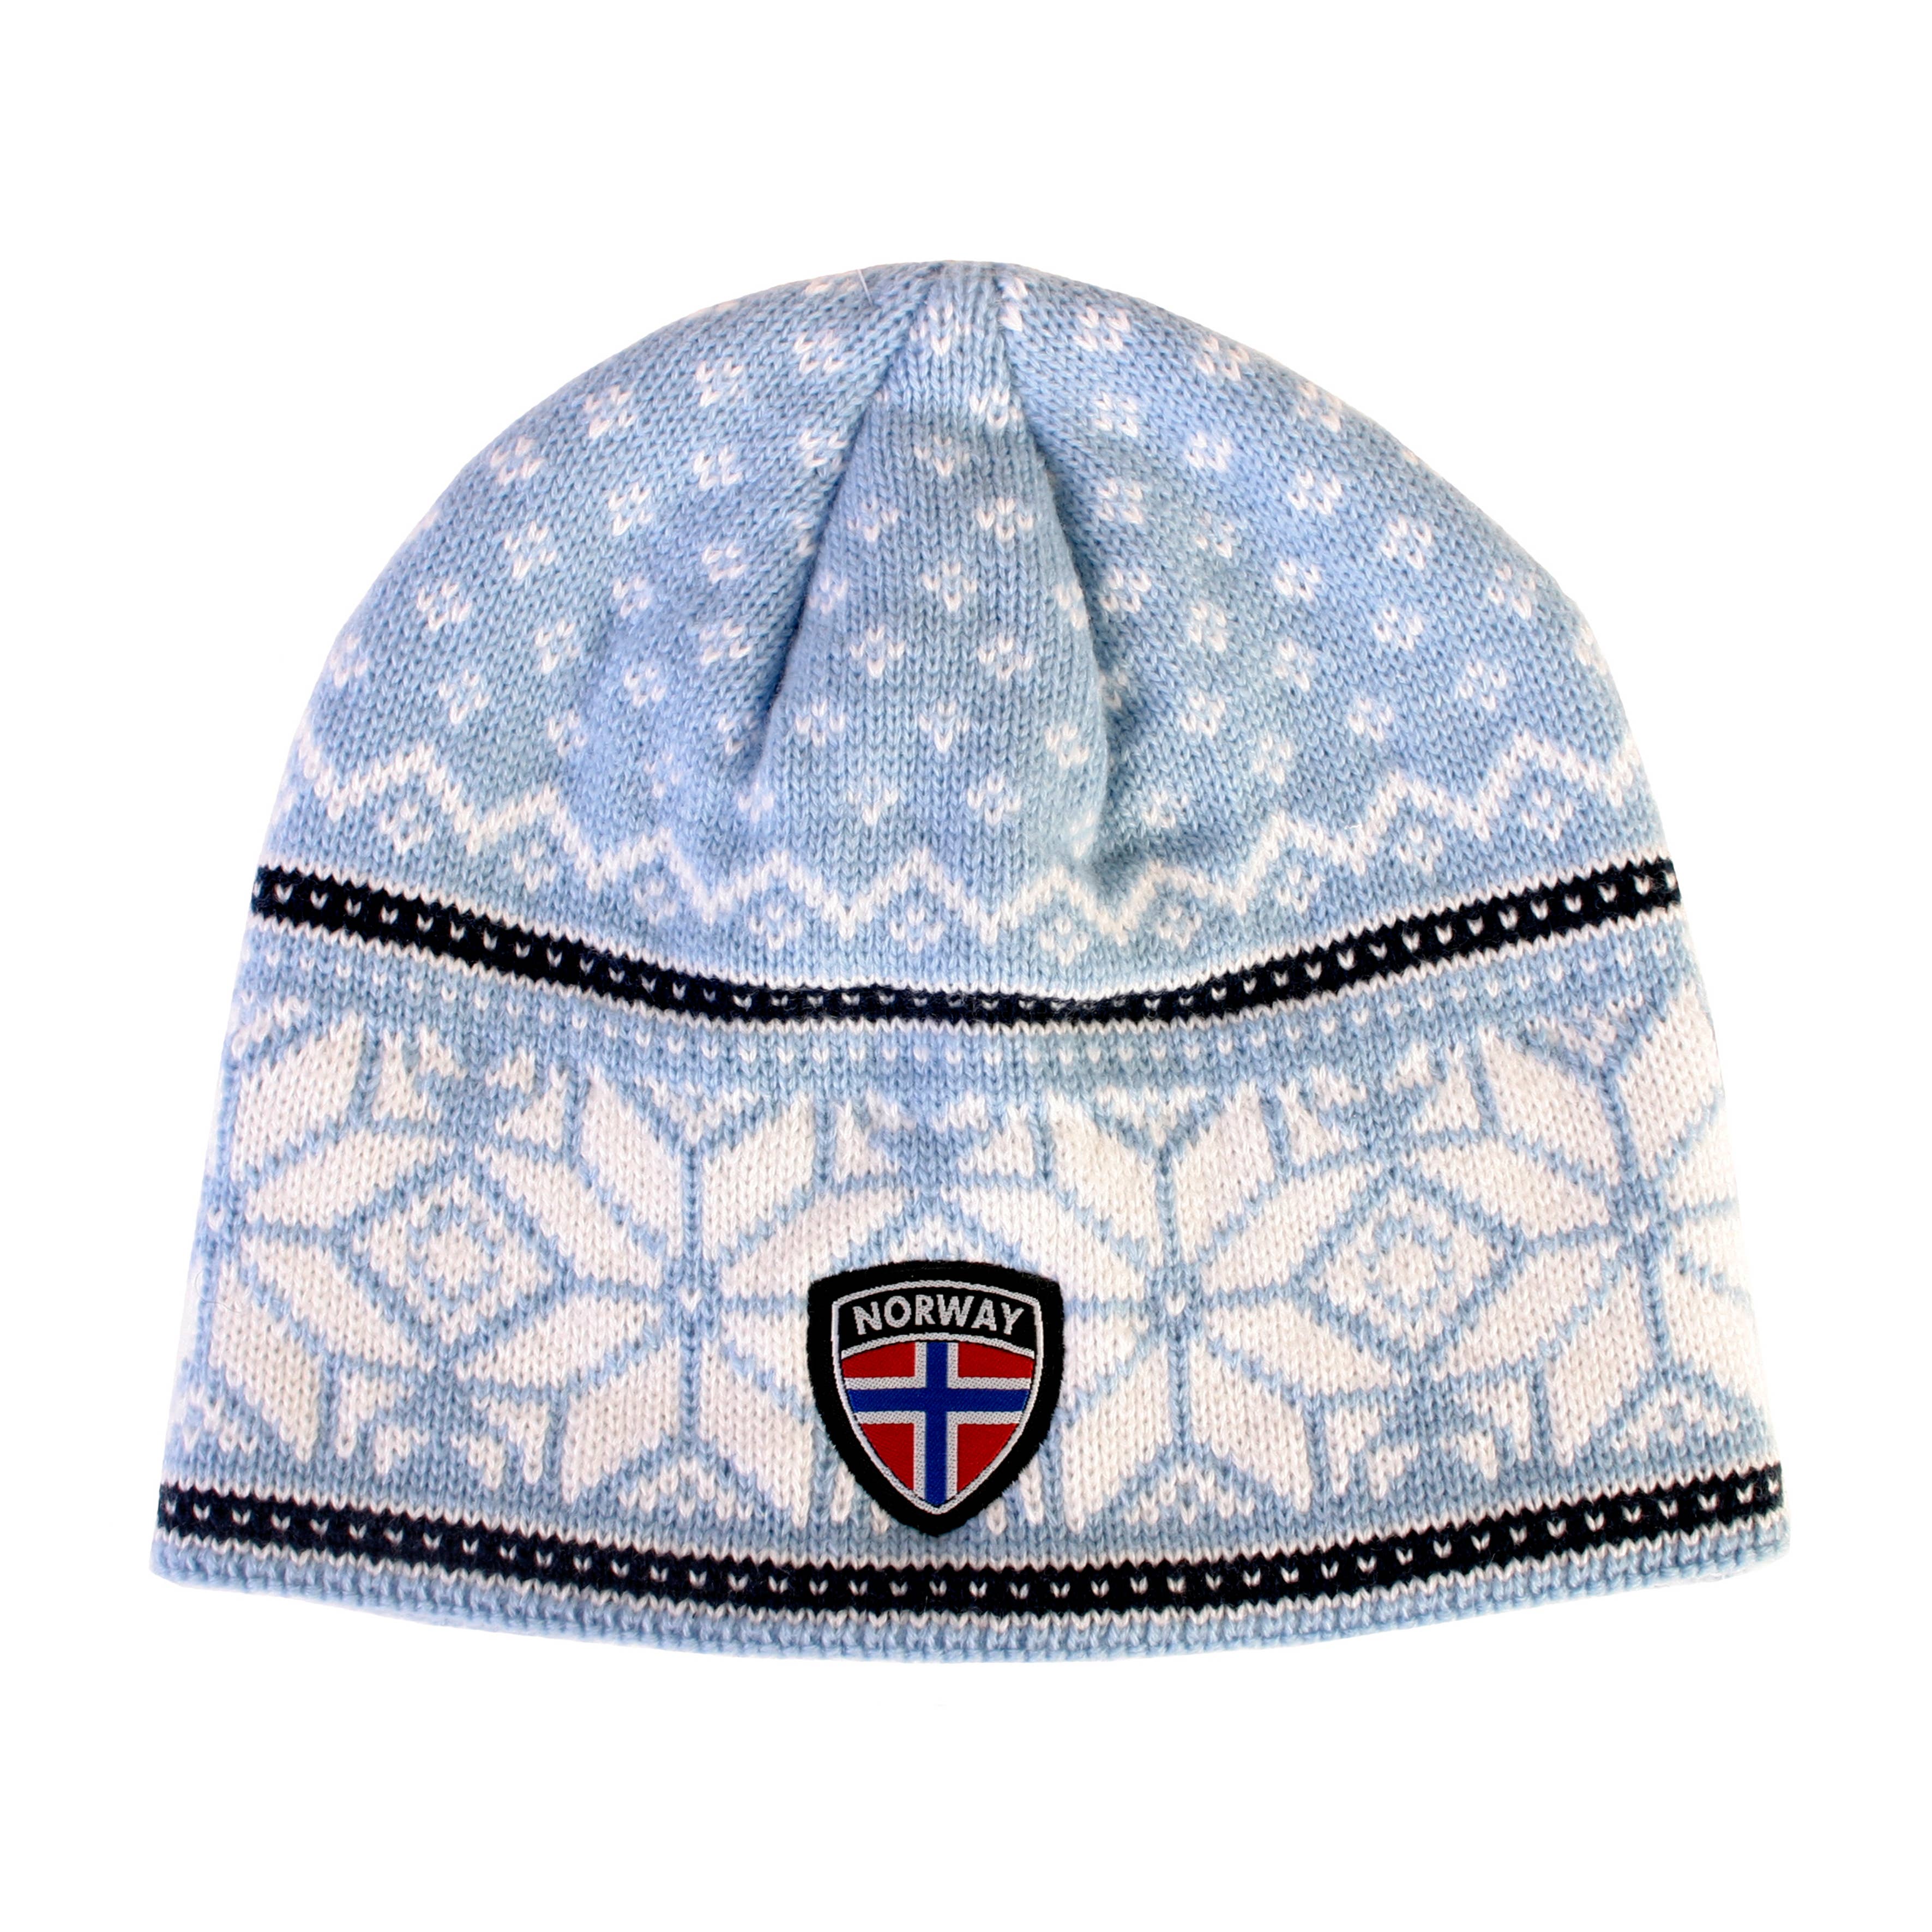 Hat: Norway Flag - Knit Hat - Lt. Blue - White Stars  - Unisex Size